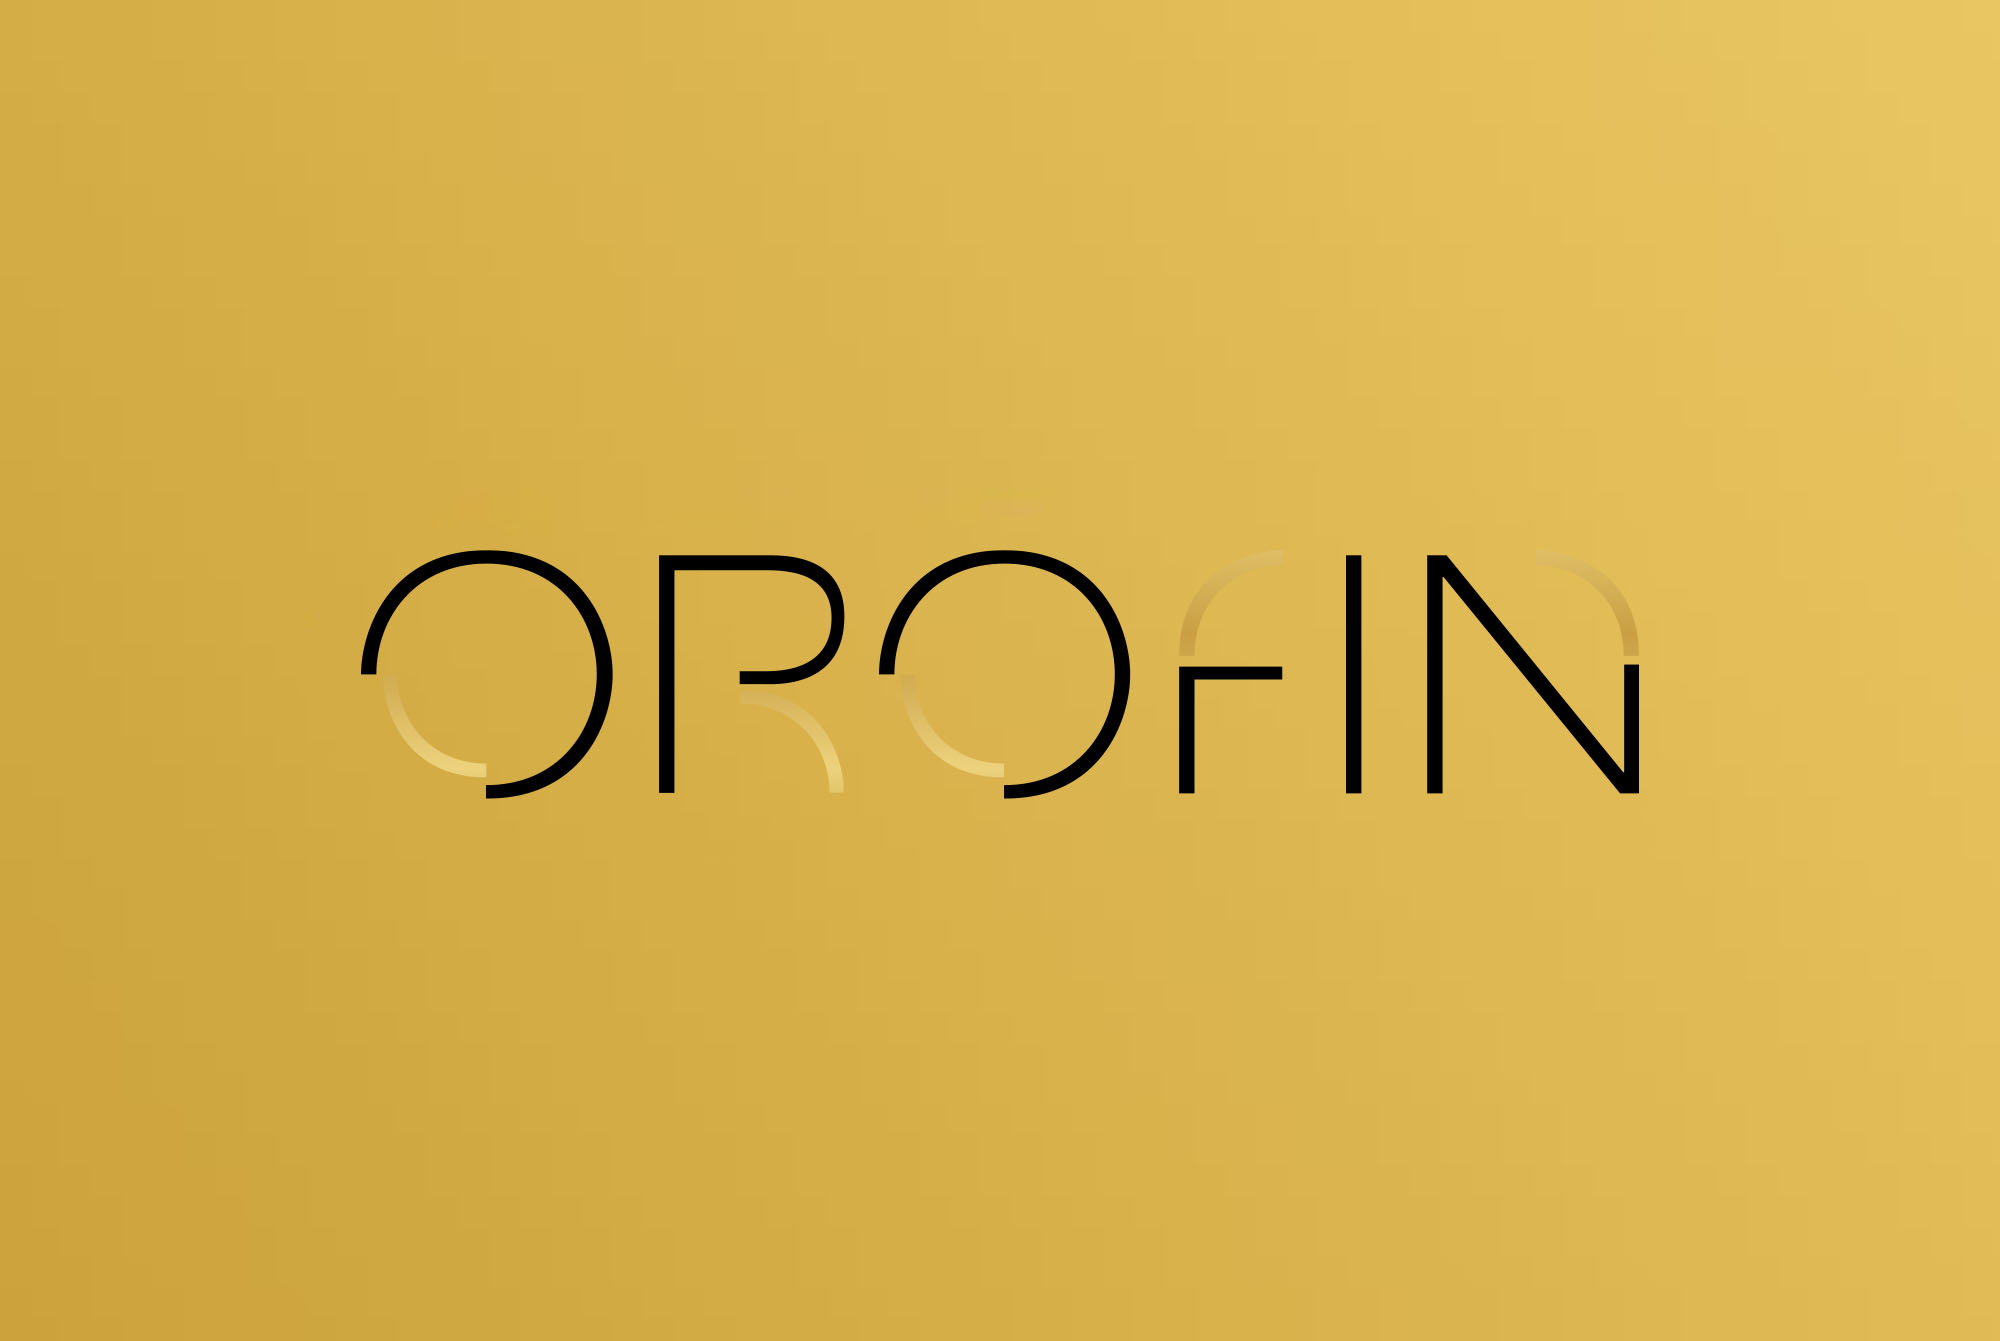 Orofin Logo - online Magazine KURZ - yellow